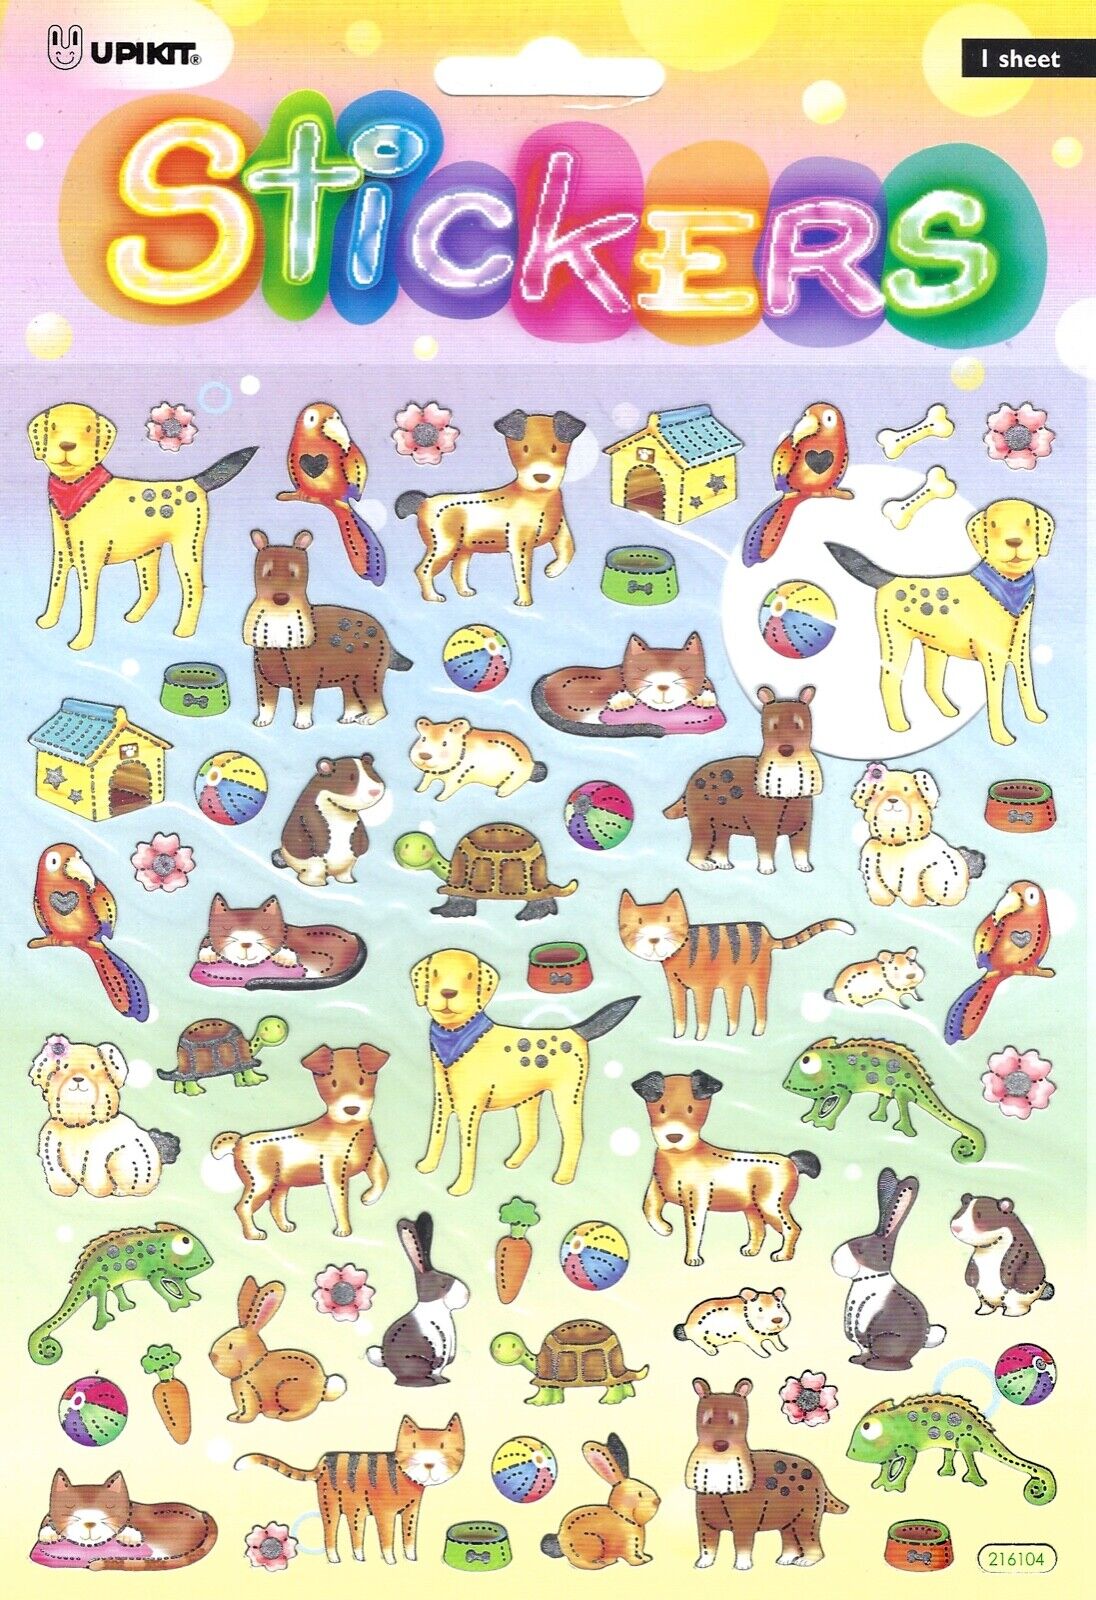 Sticker Upikit Animal Sale special price sticker Dogs Cats Max 68% OFF Lizard Rabbit Birds